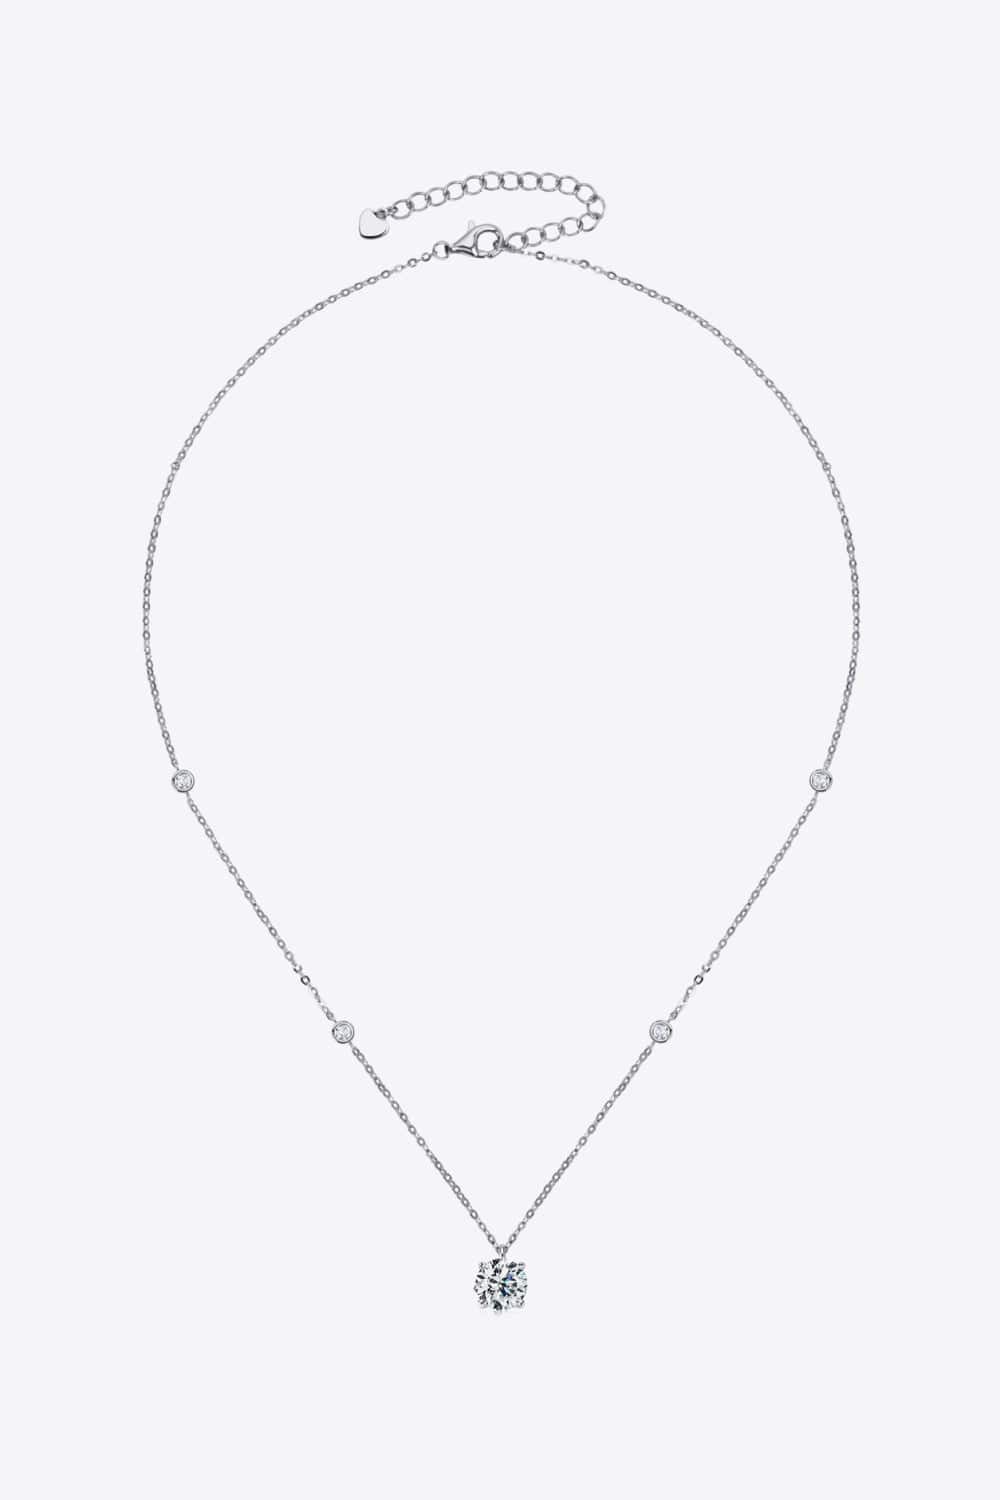 2 Carat Moissanite 4-Prong 925 Sterling Silver Necklace - Body By J'ne